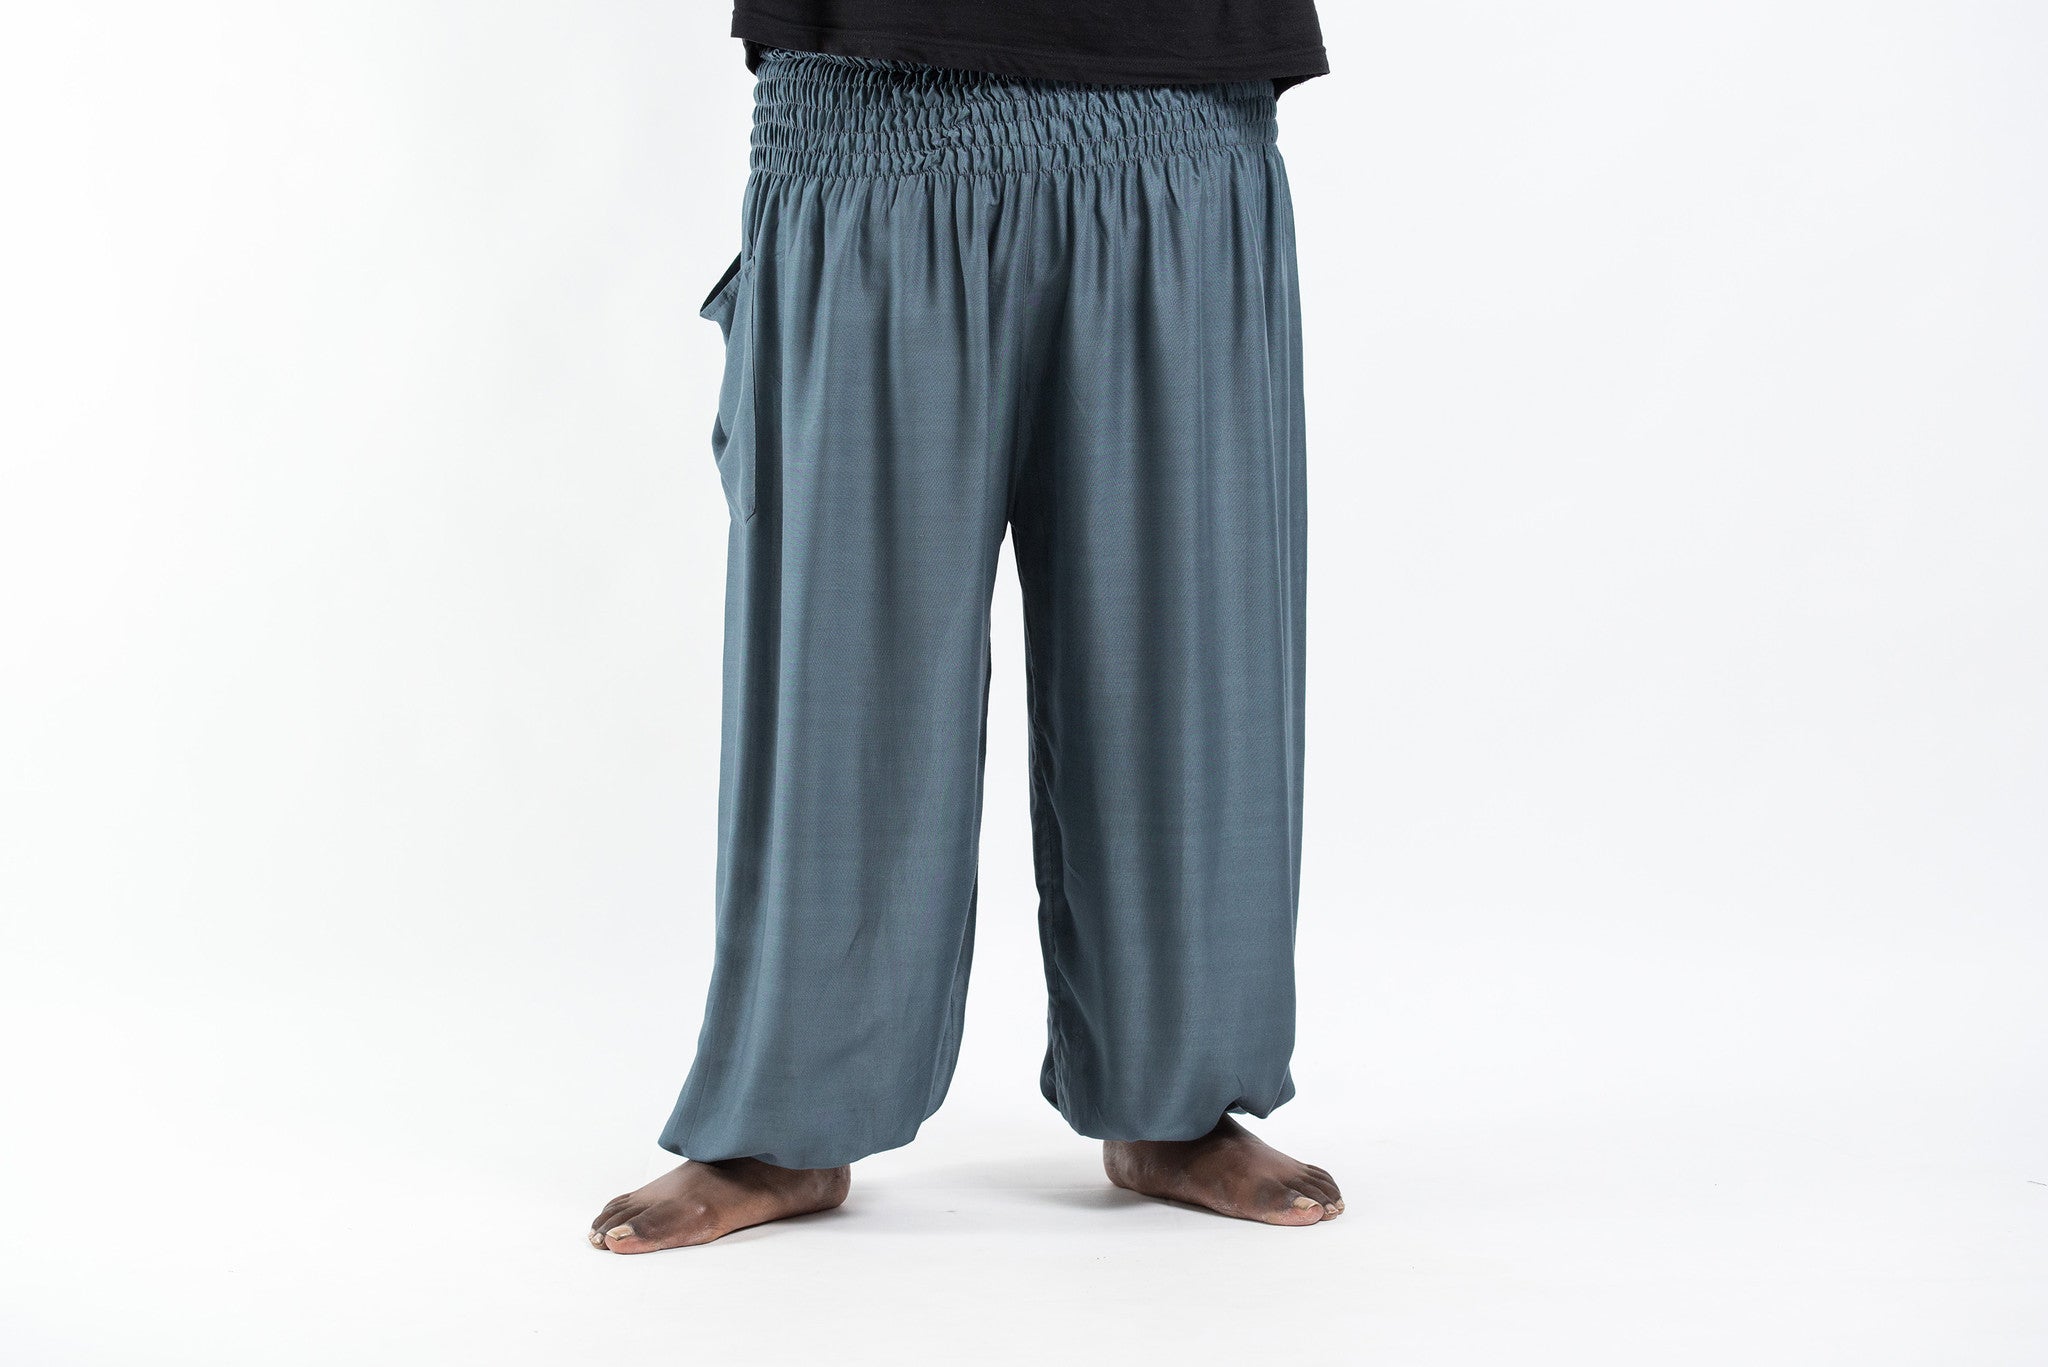 Plus Size Solid Color Men's Harem Pants in Gray